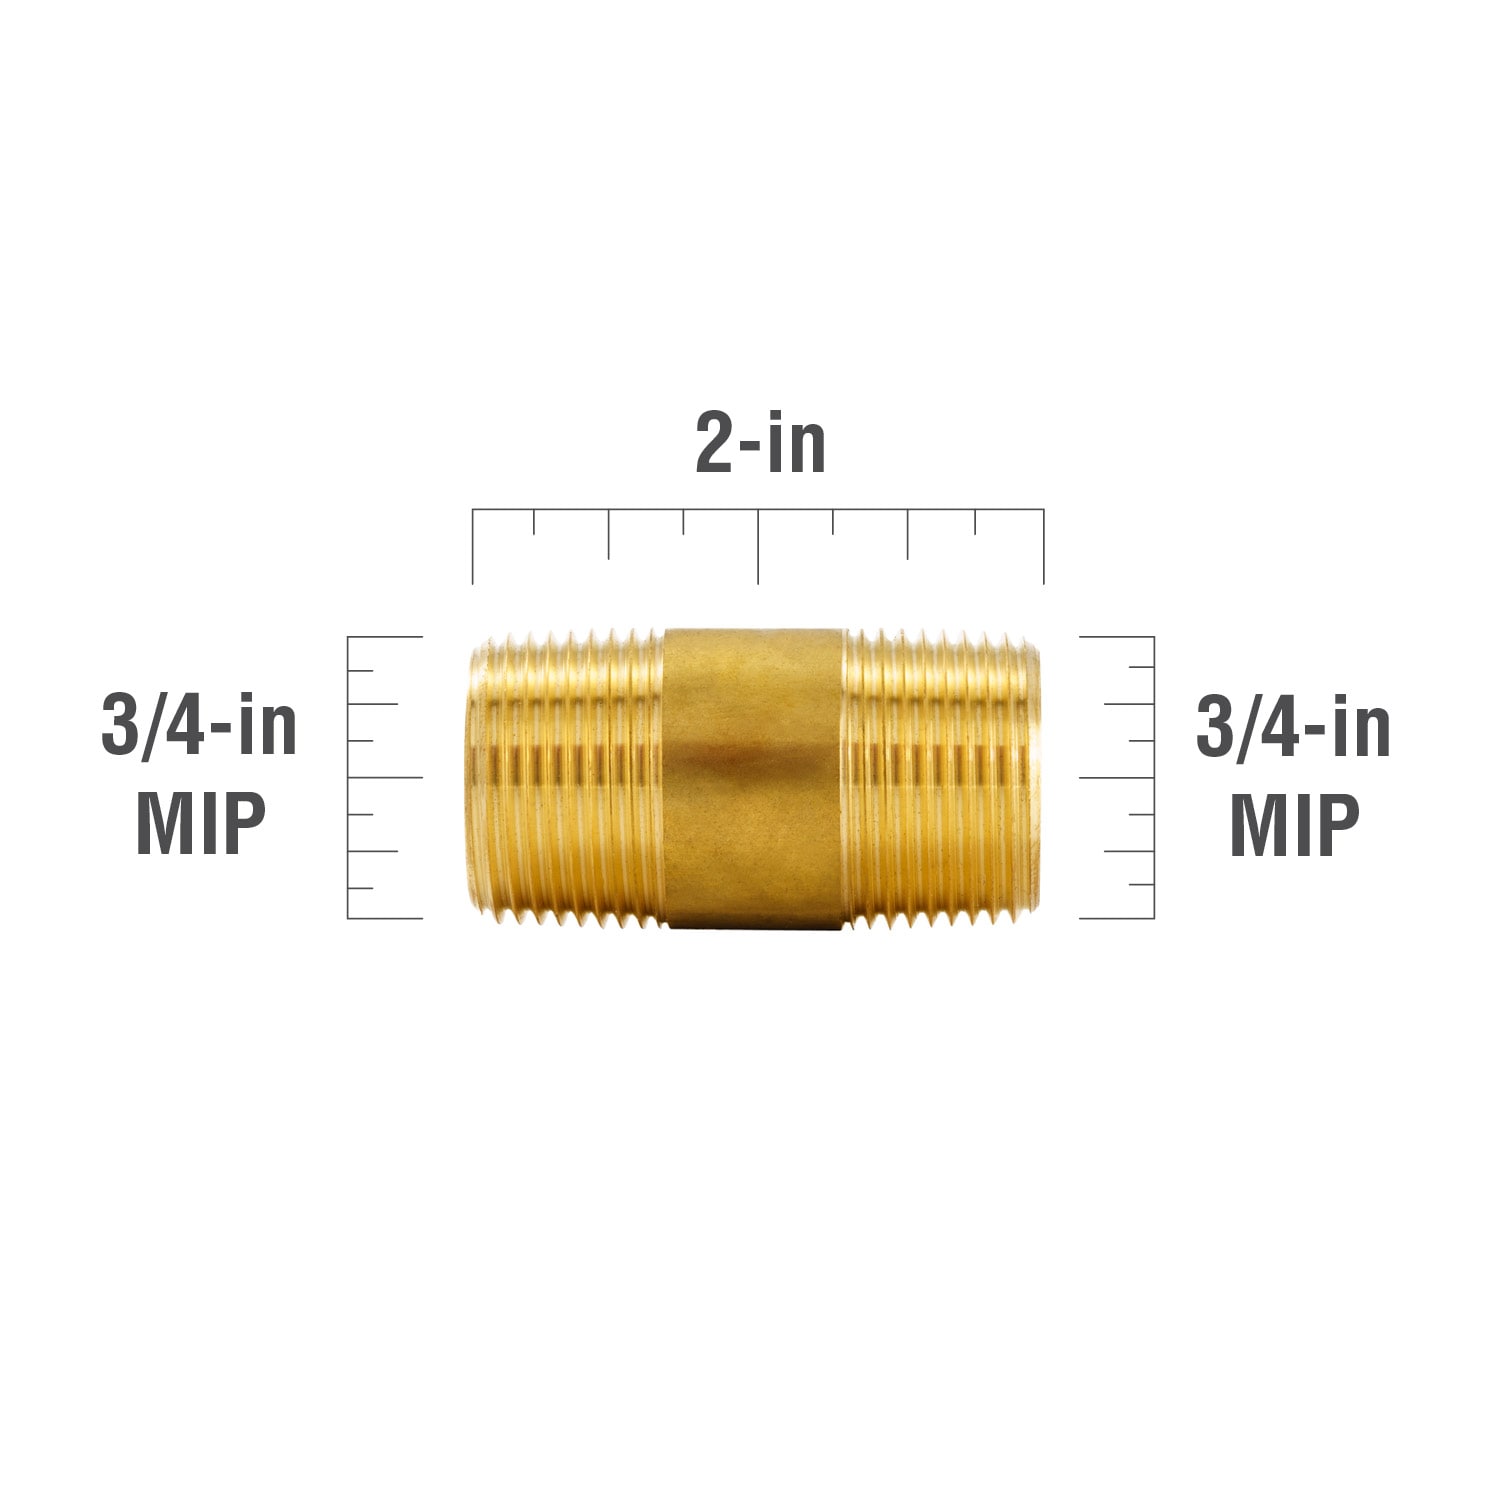 Proline Series 3/4-in x 3/4-in Threaded Male Adapter Nipple